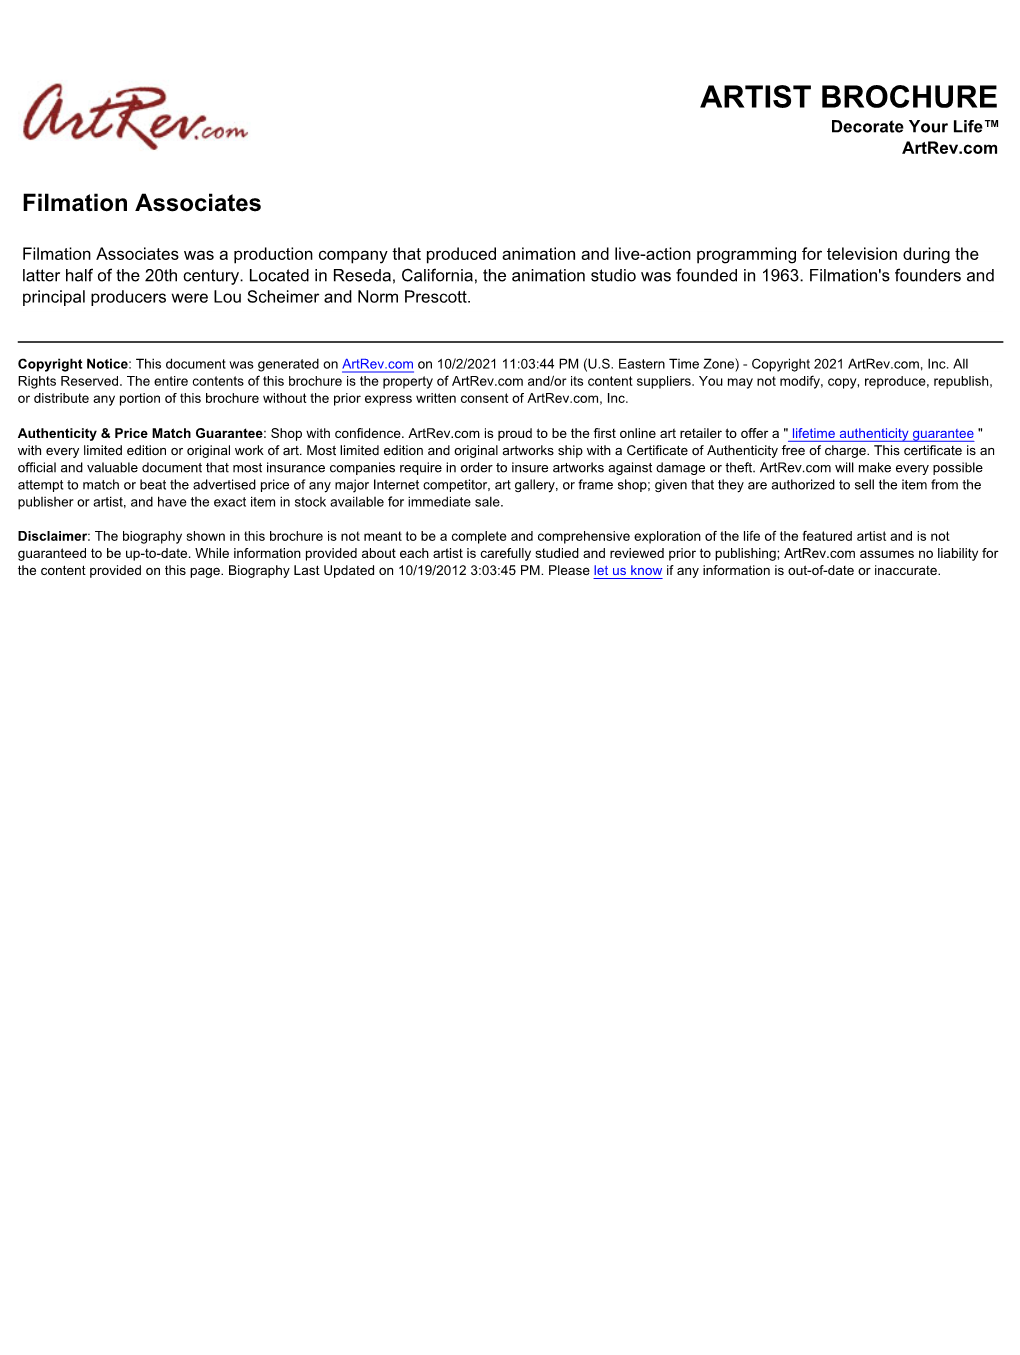 Filmation Associates Biography